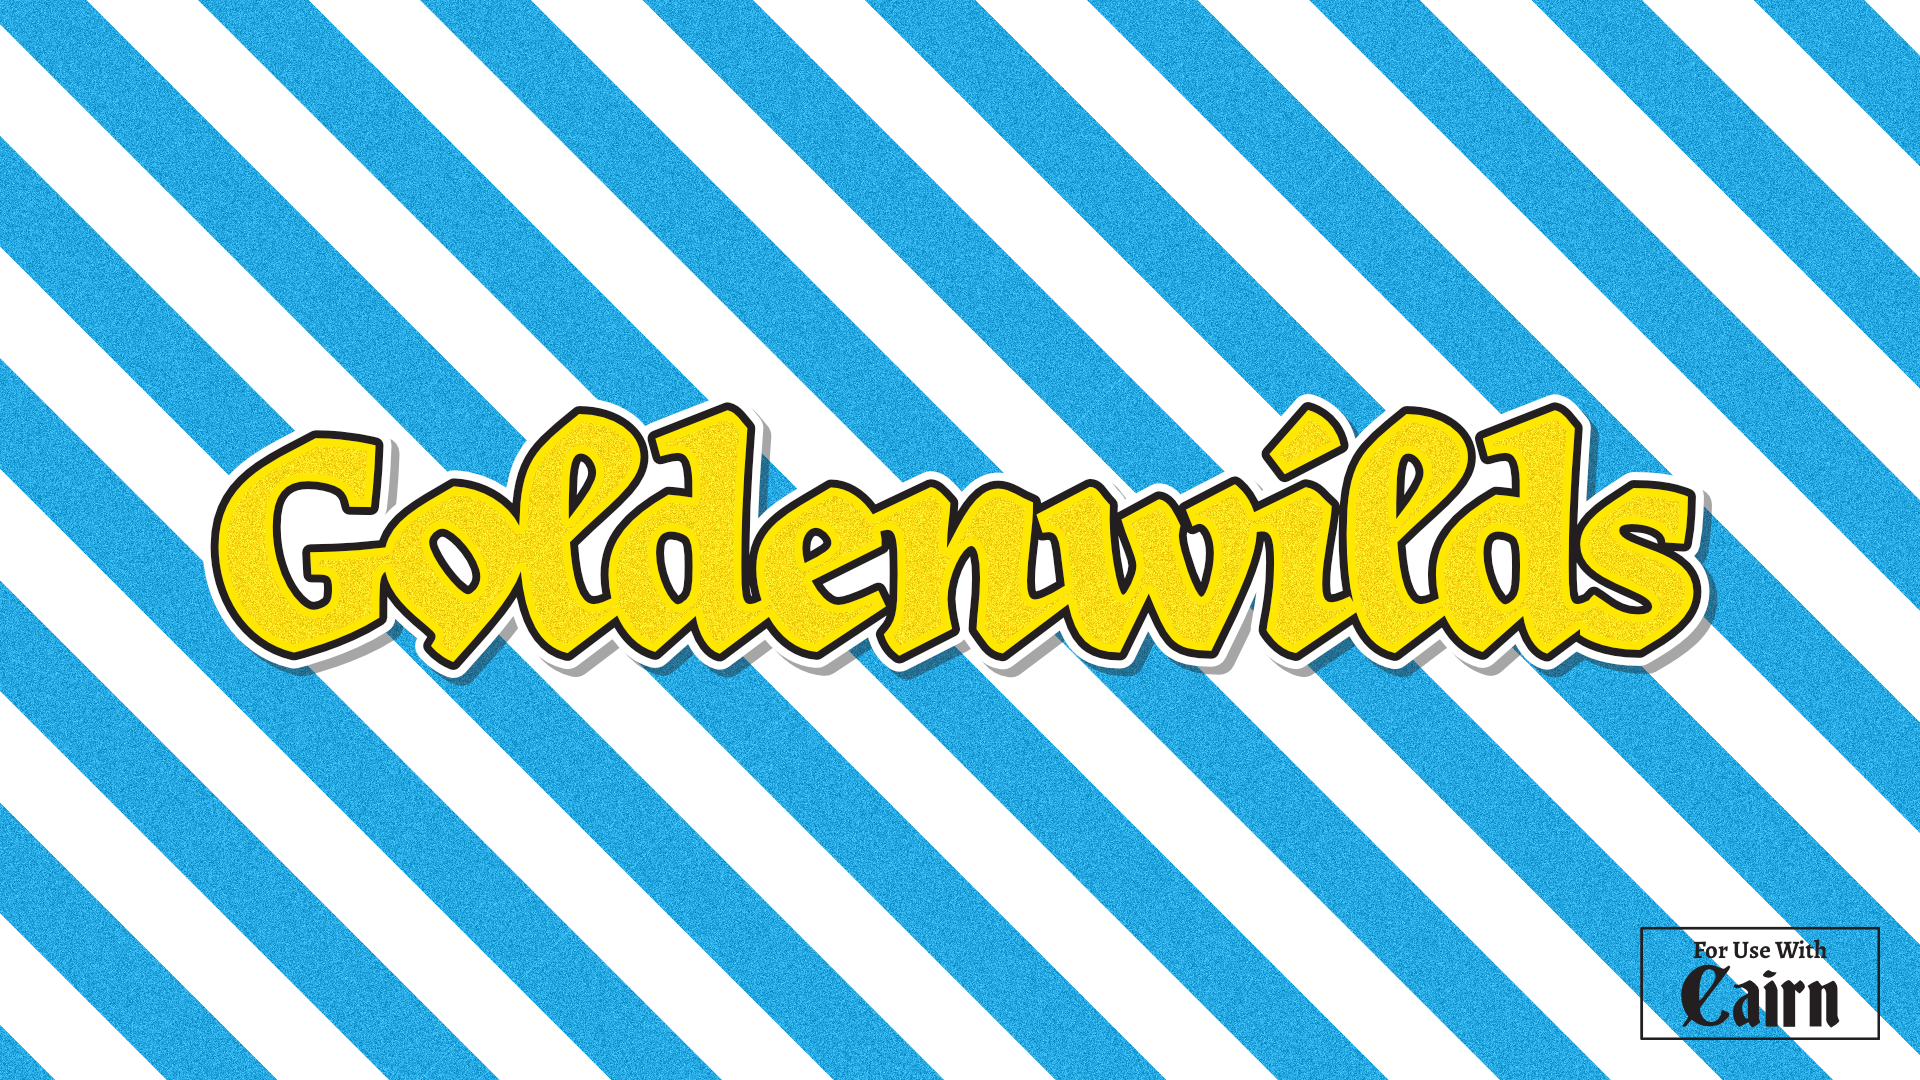 Goldenwilds promotional image